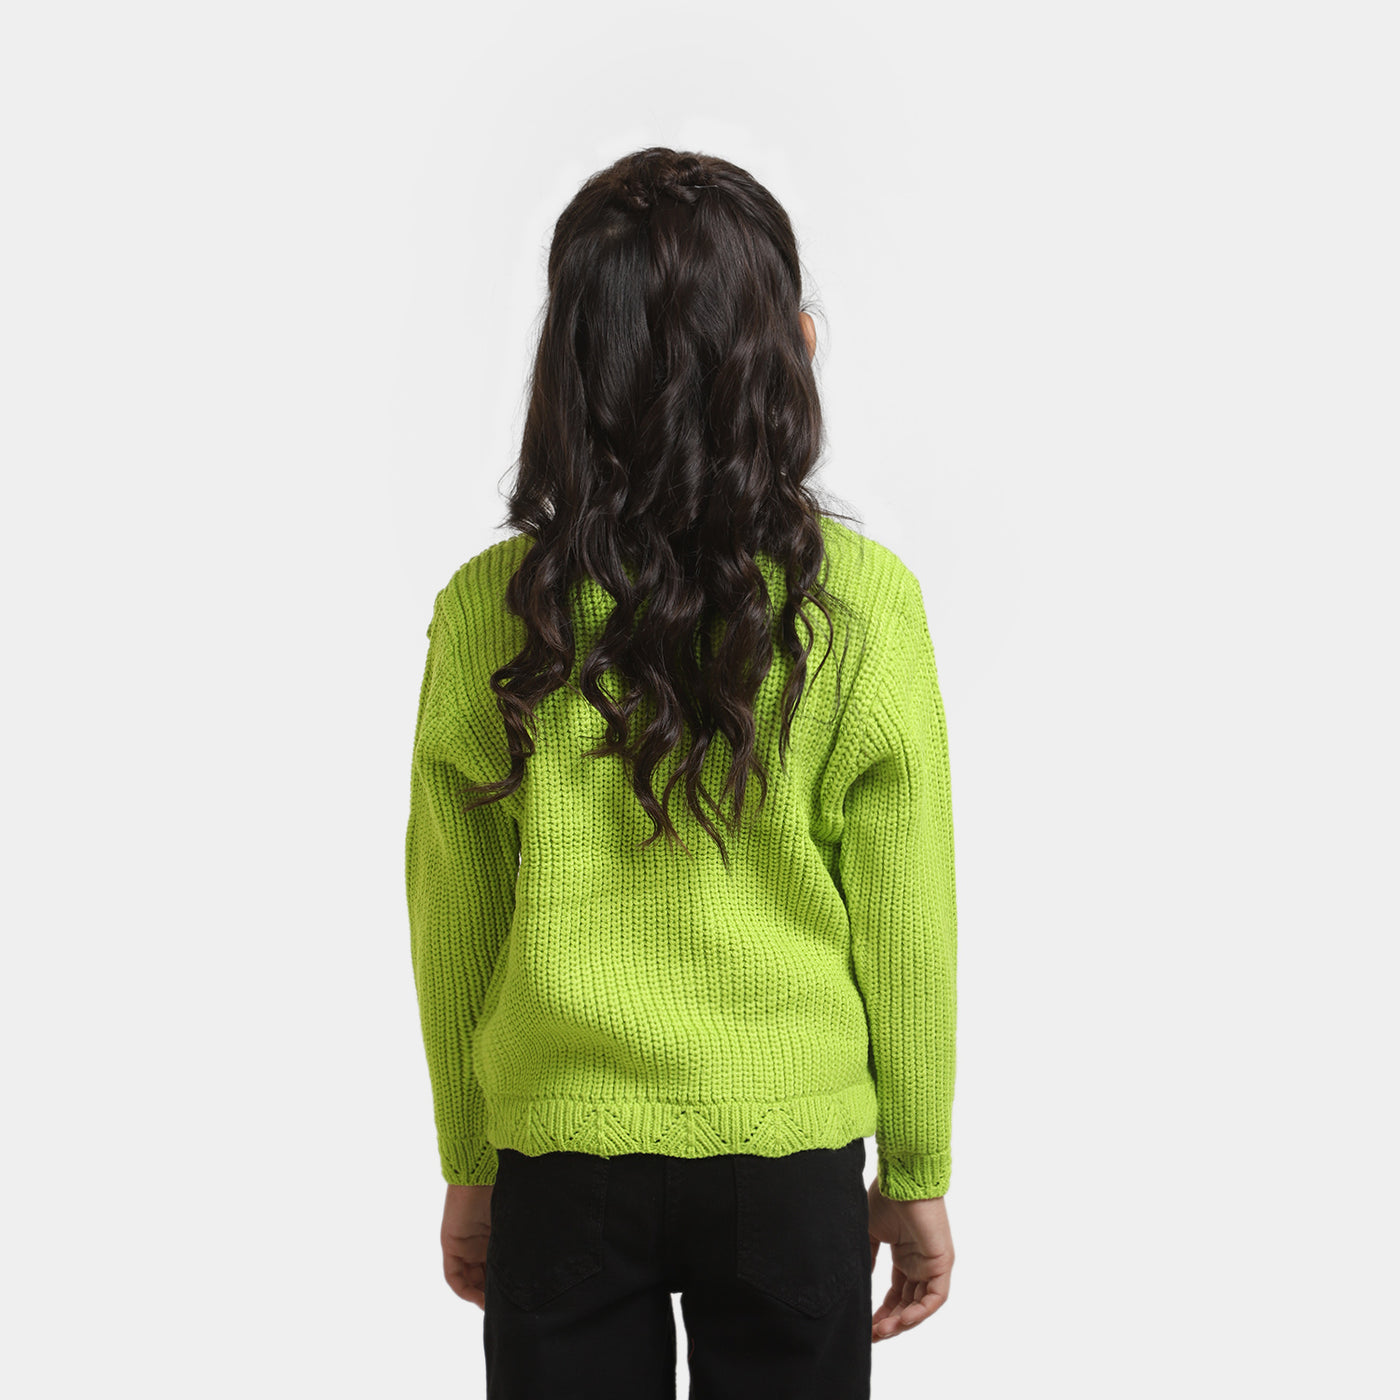 Girls Knitted Sweater GS-005 - Green